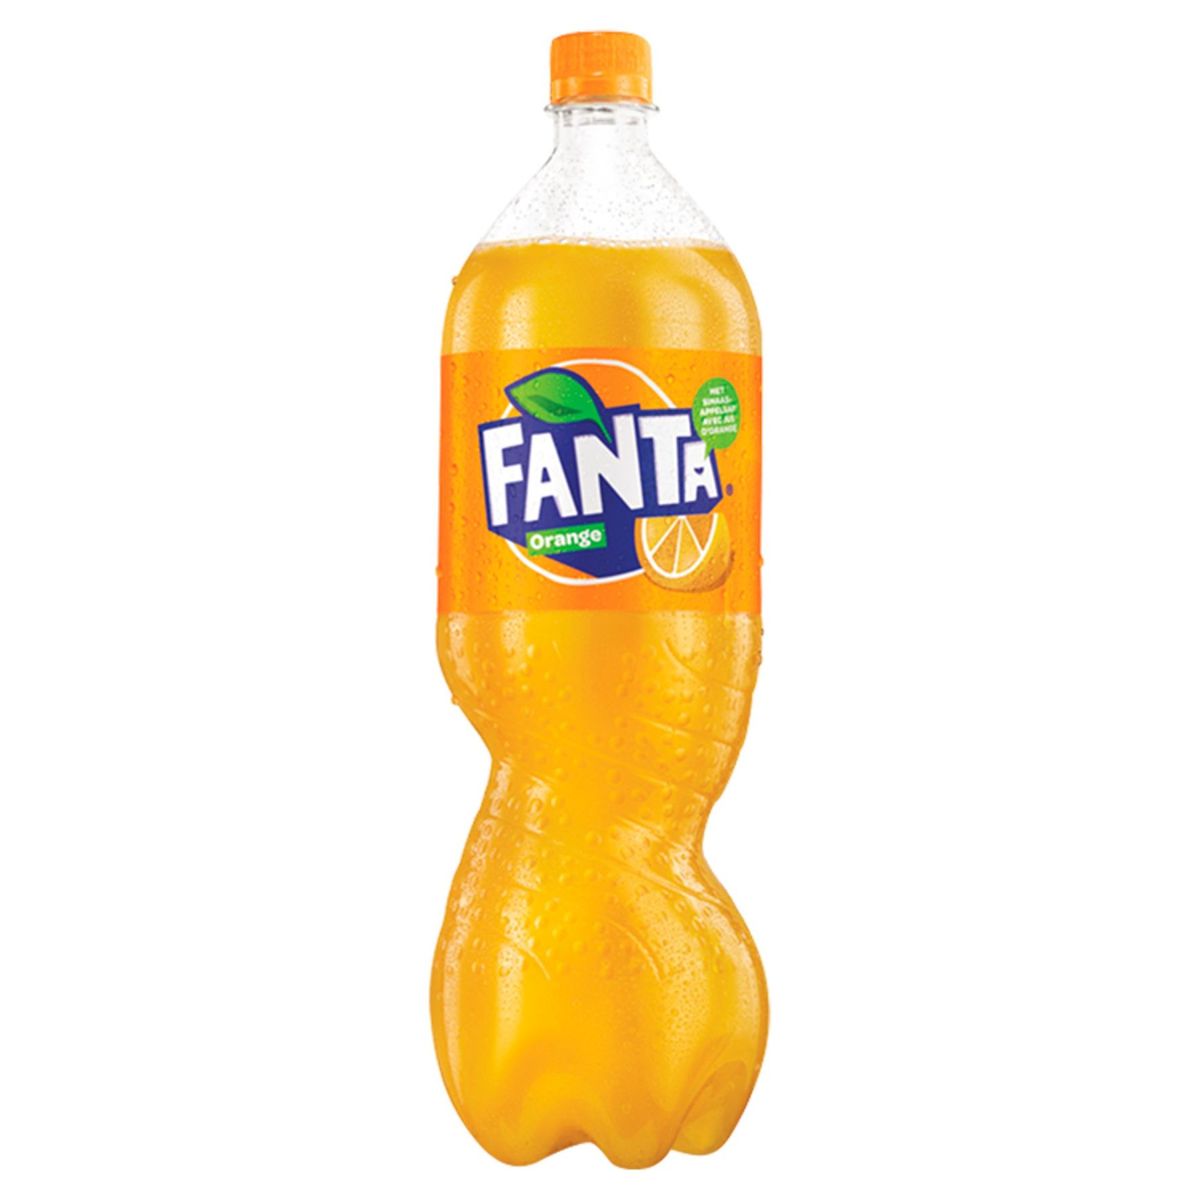 Fanta Orange Lemonade Pet 1500 ml